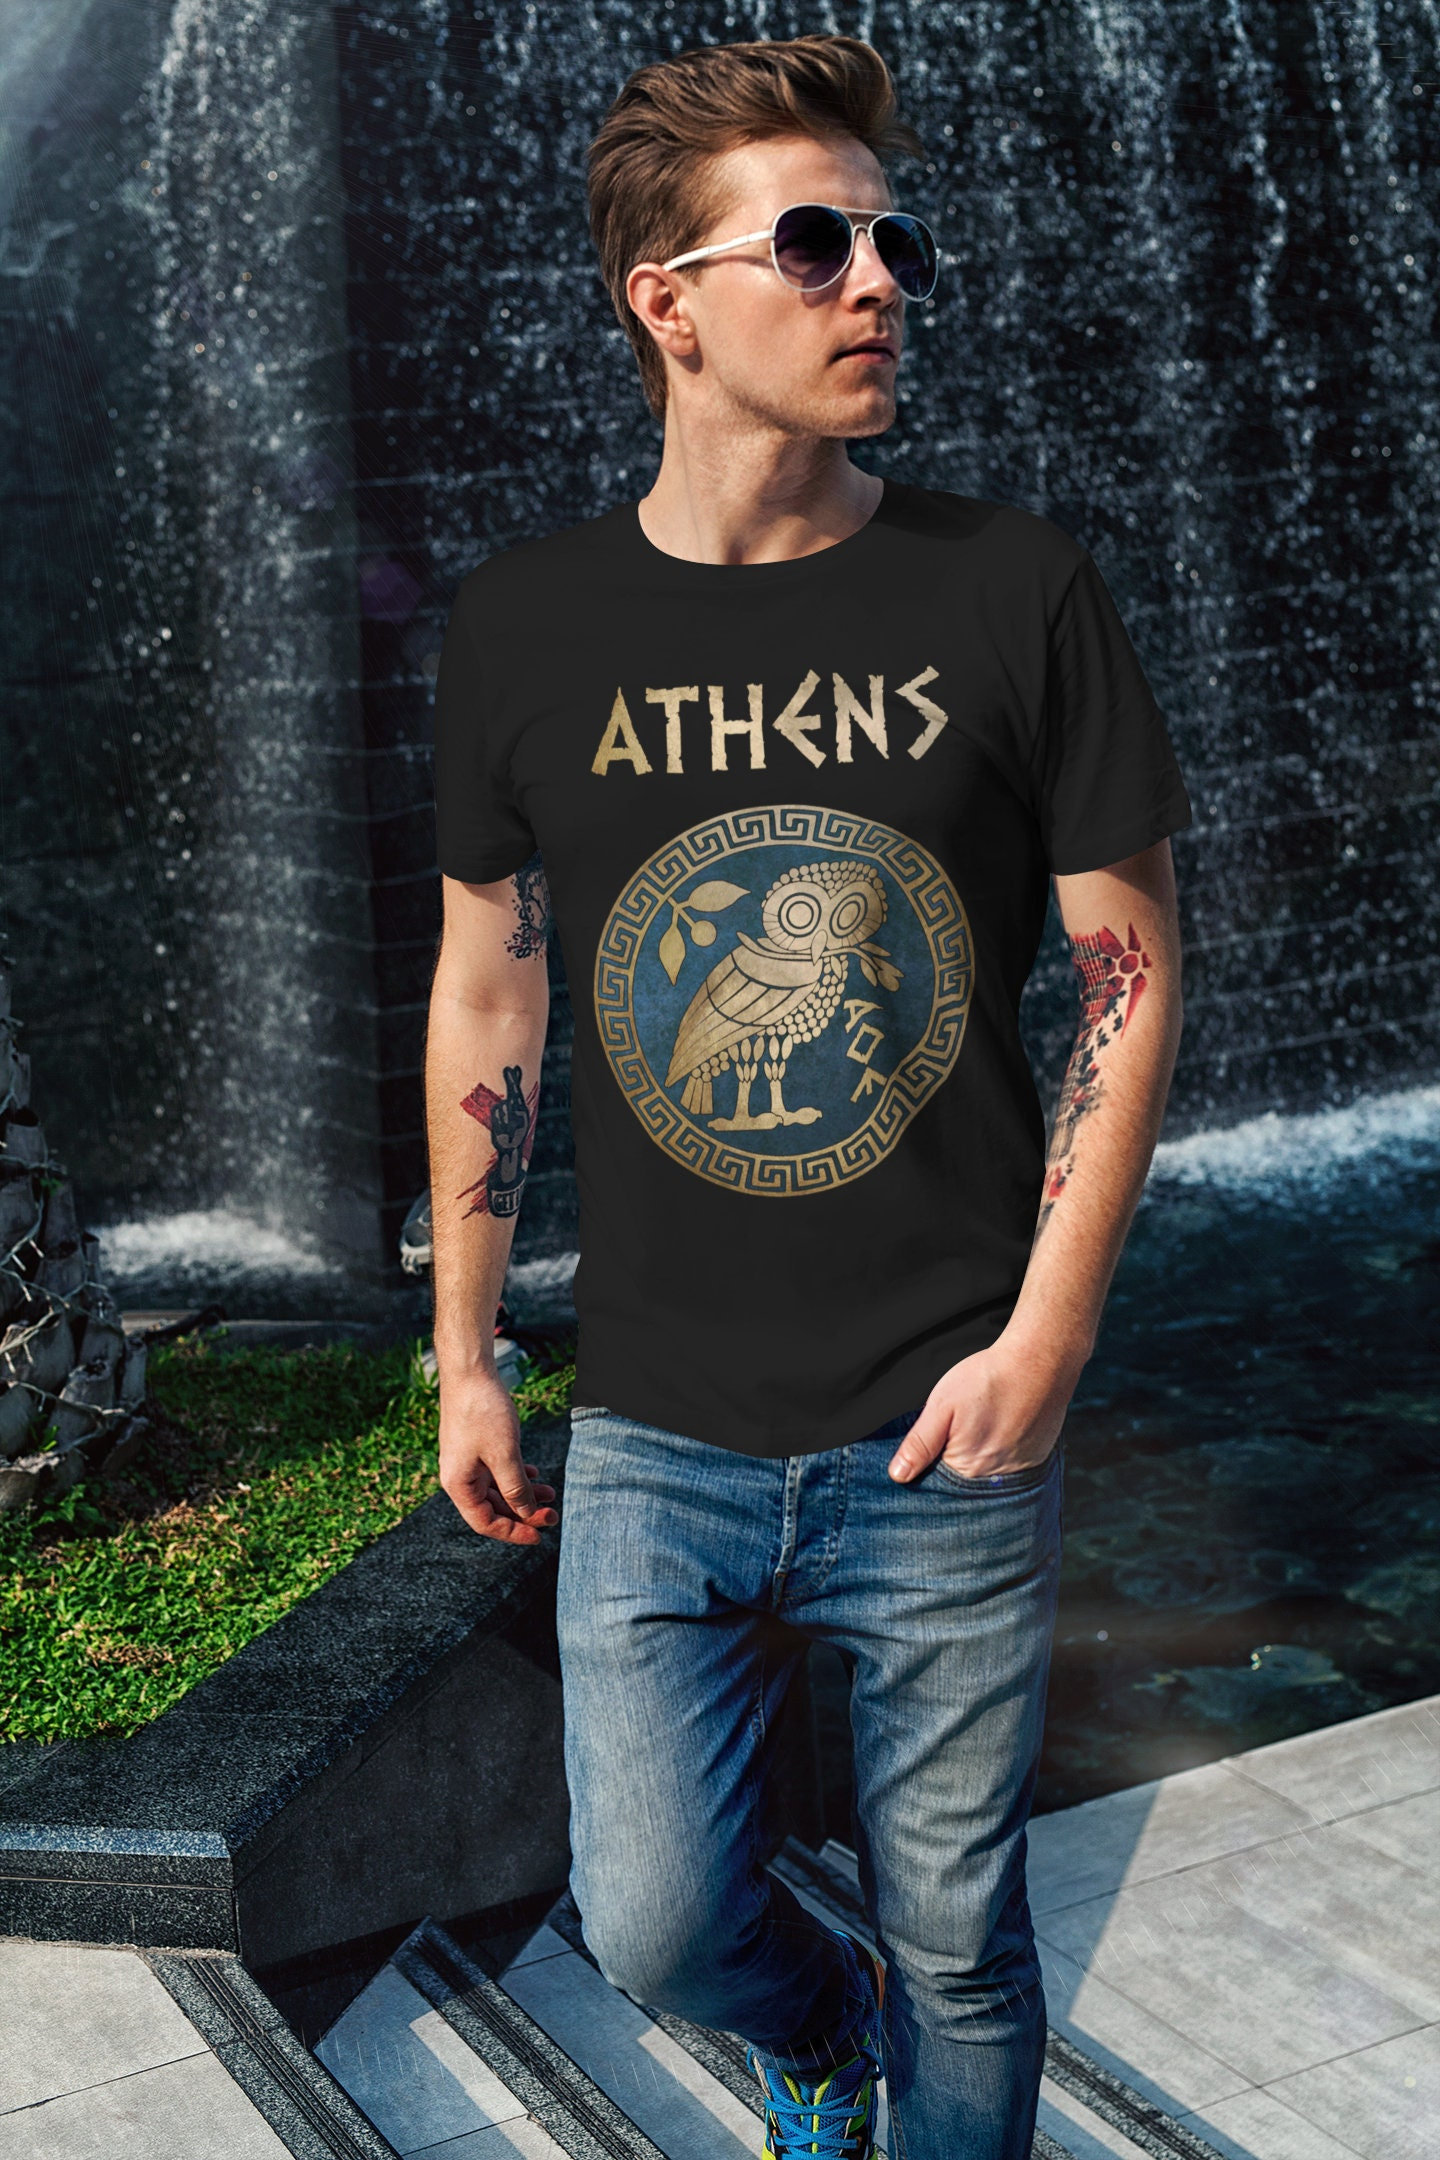 Athens Athenian Owl Symbol of Goddess Athena and Polis of Athens T-shirt